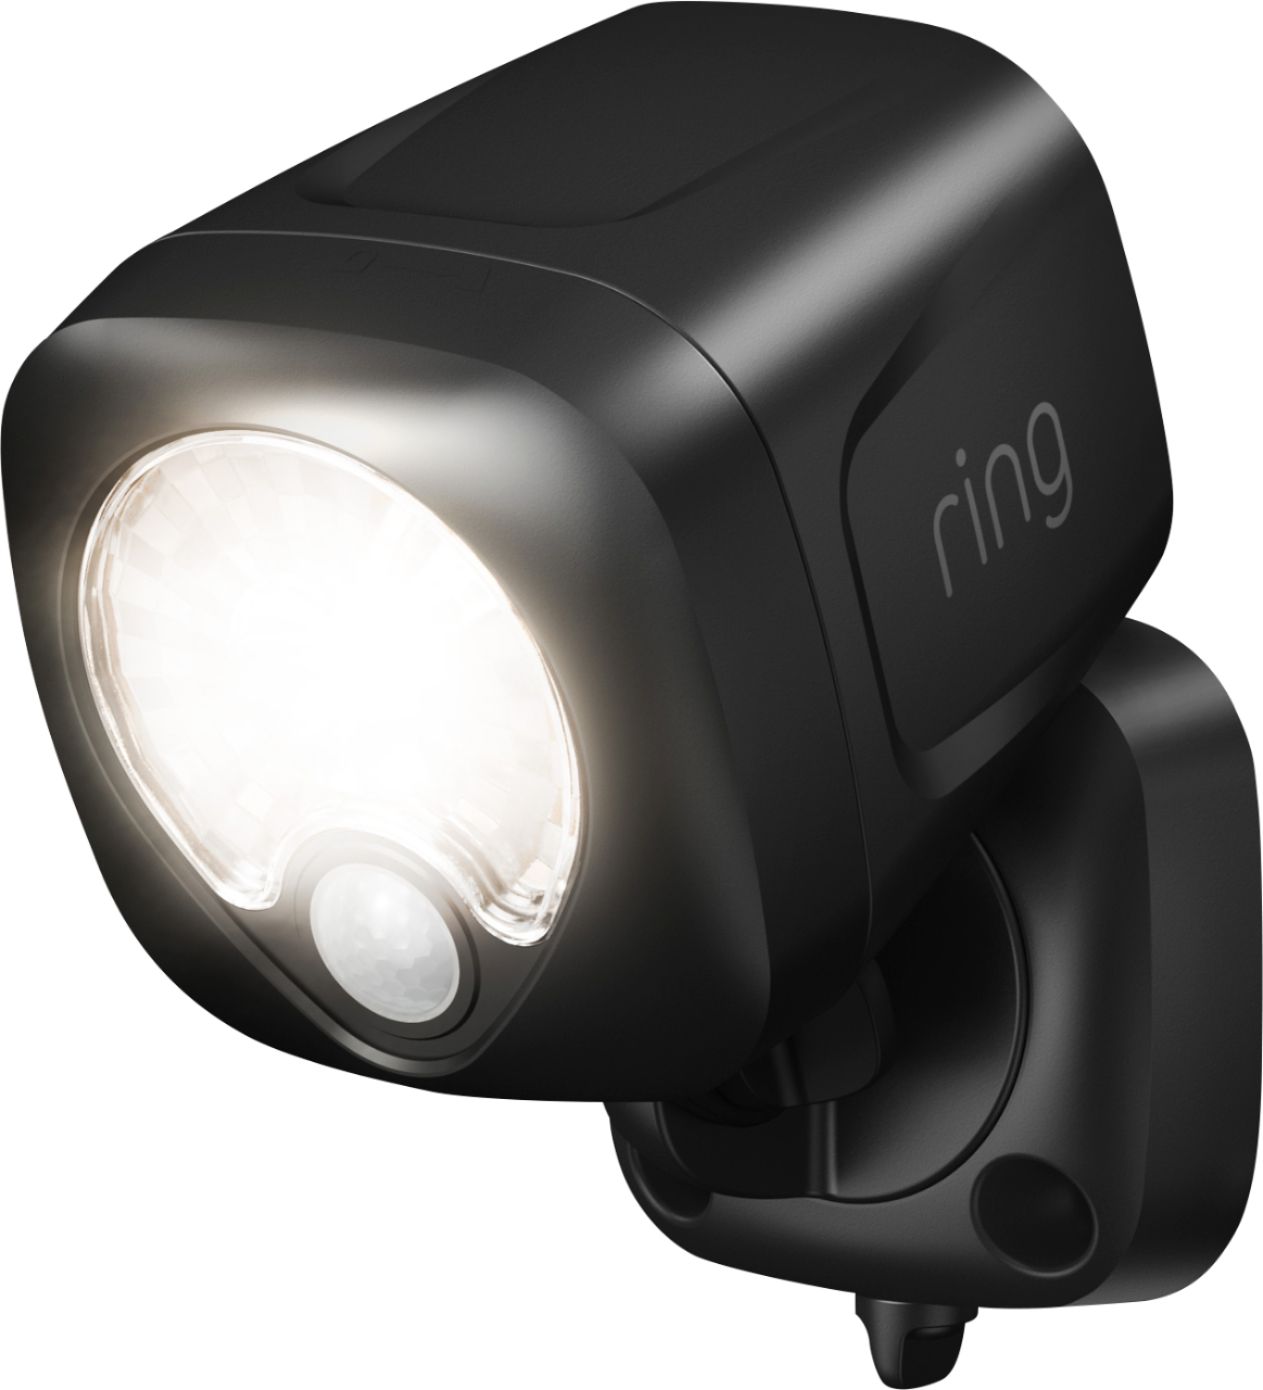 sundeco-design: Ring Smart Light 5B11S8-Weno